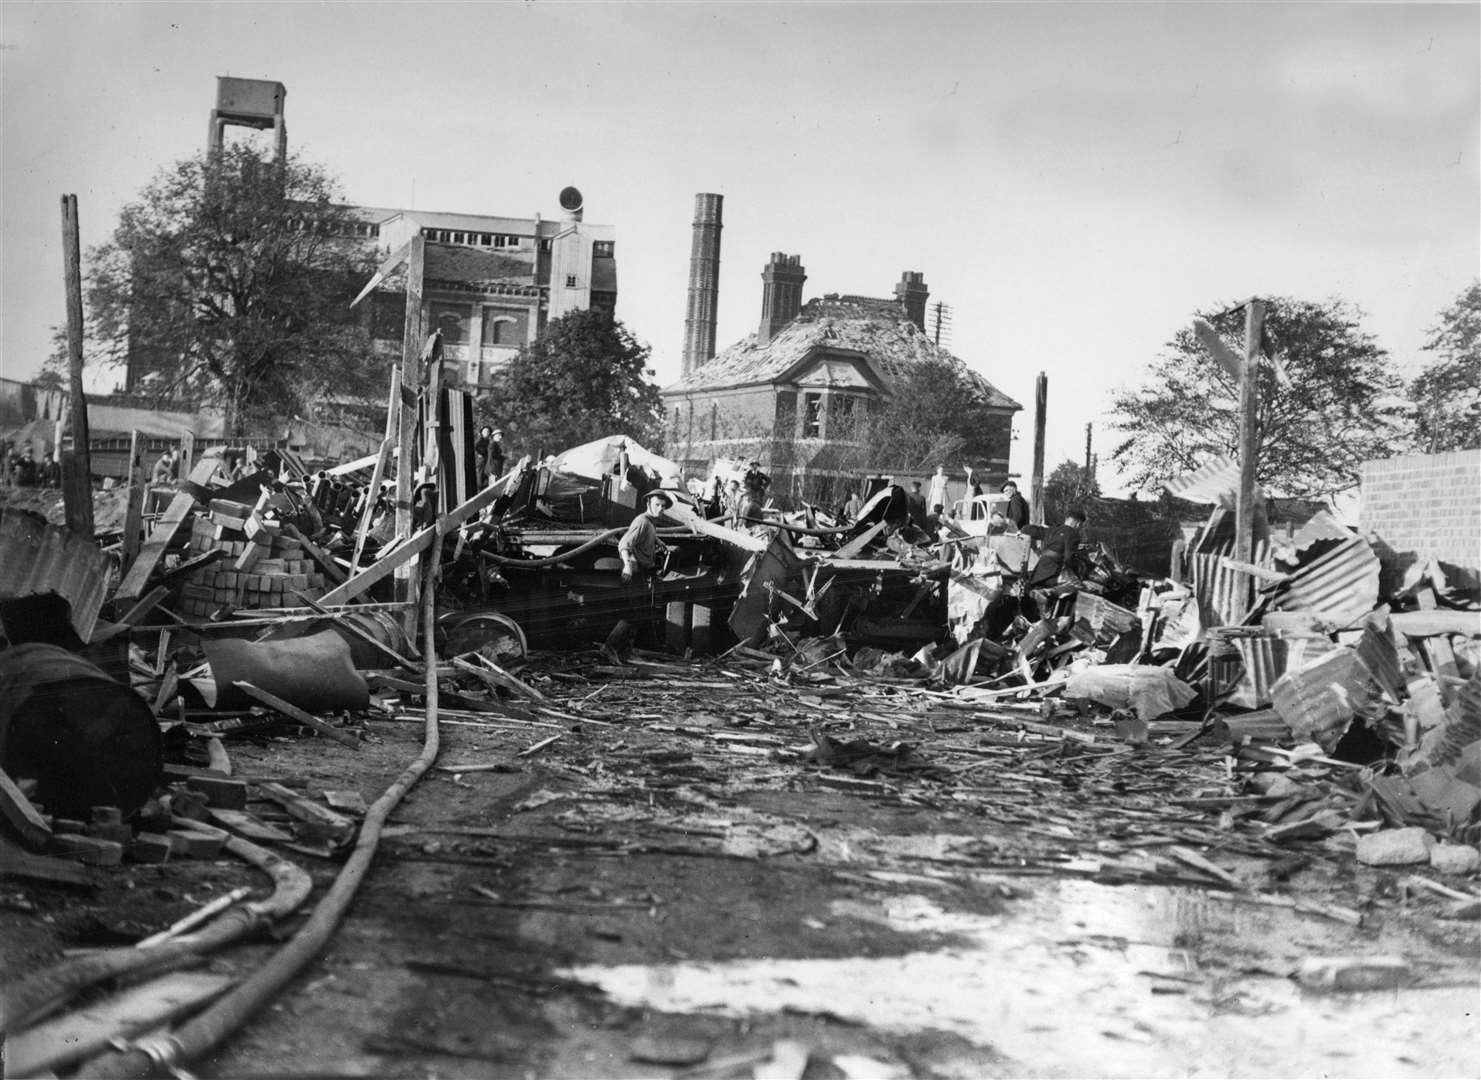 Beaver Road School was destroyed in the raid. Credit: Steve Salter (63146619)